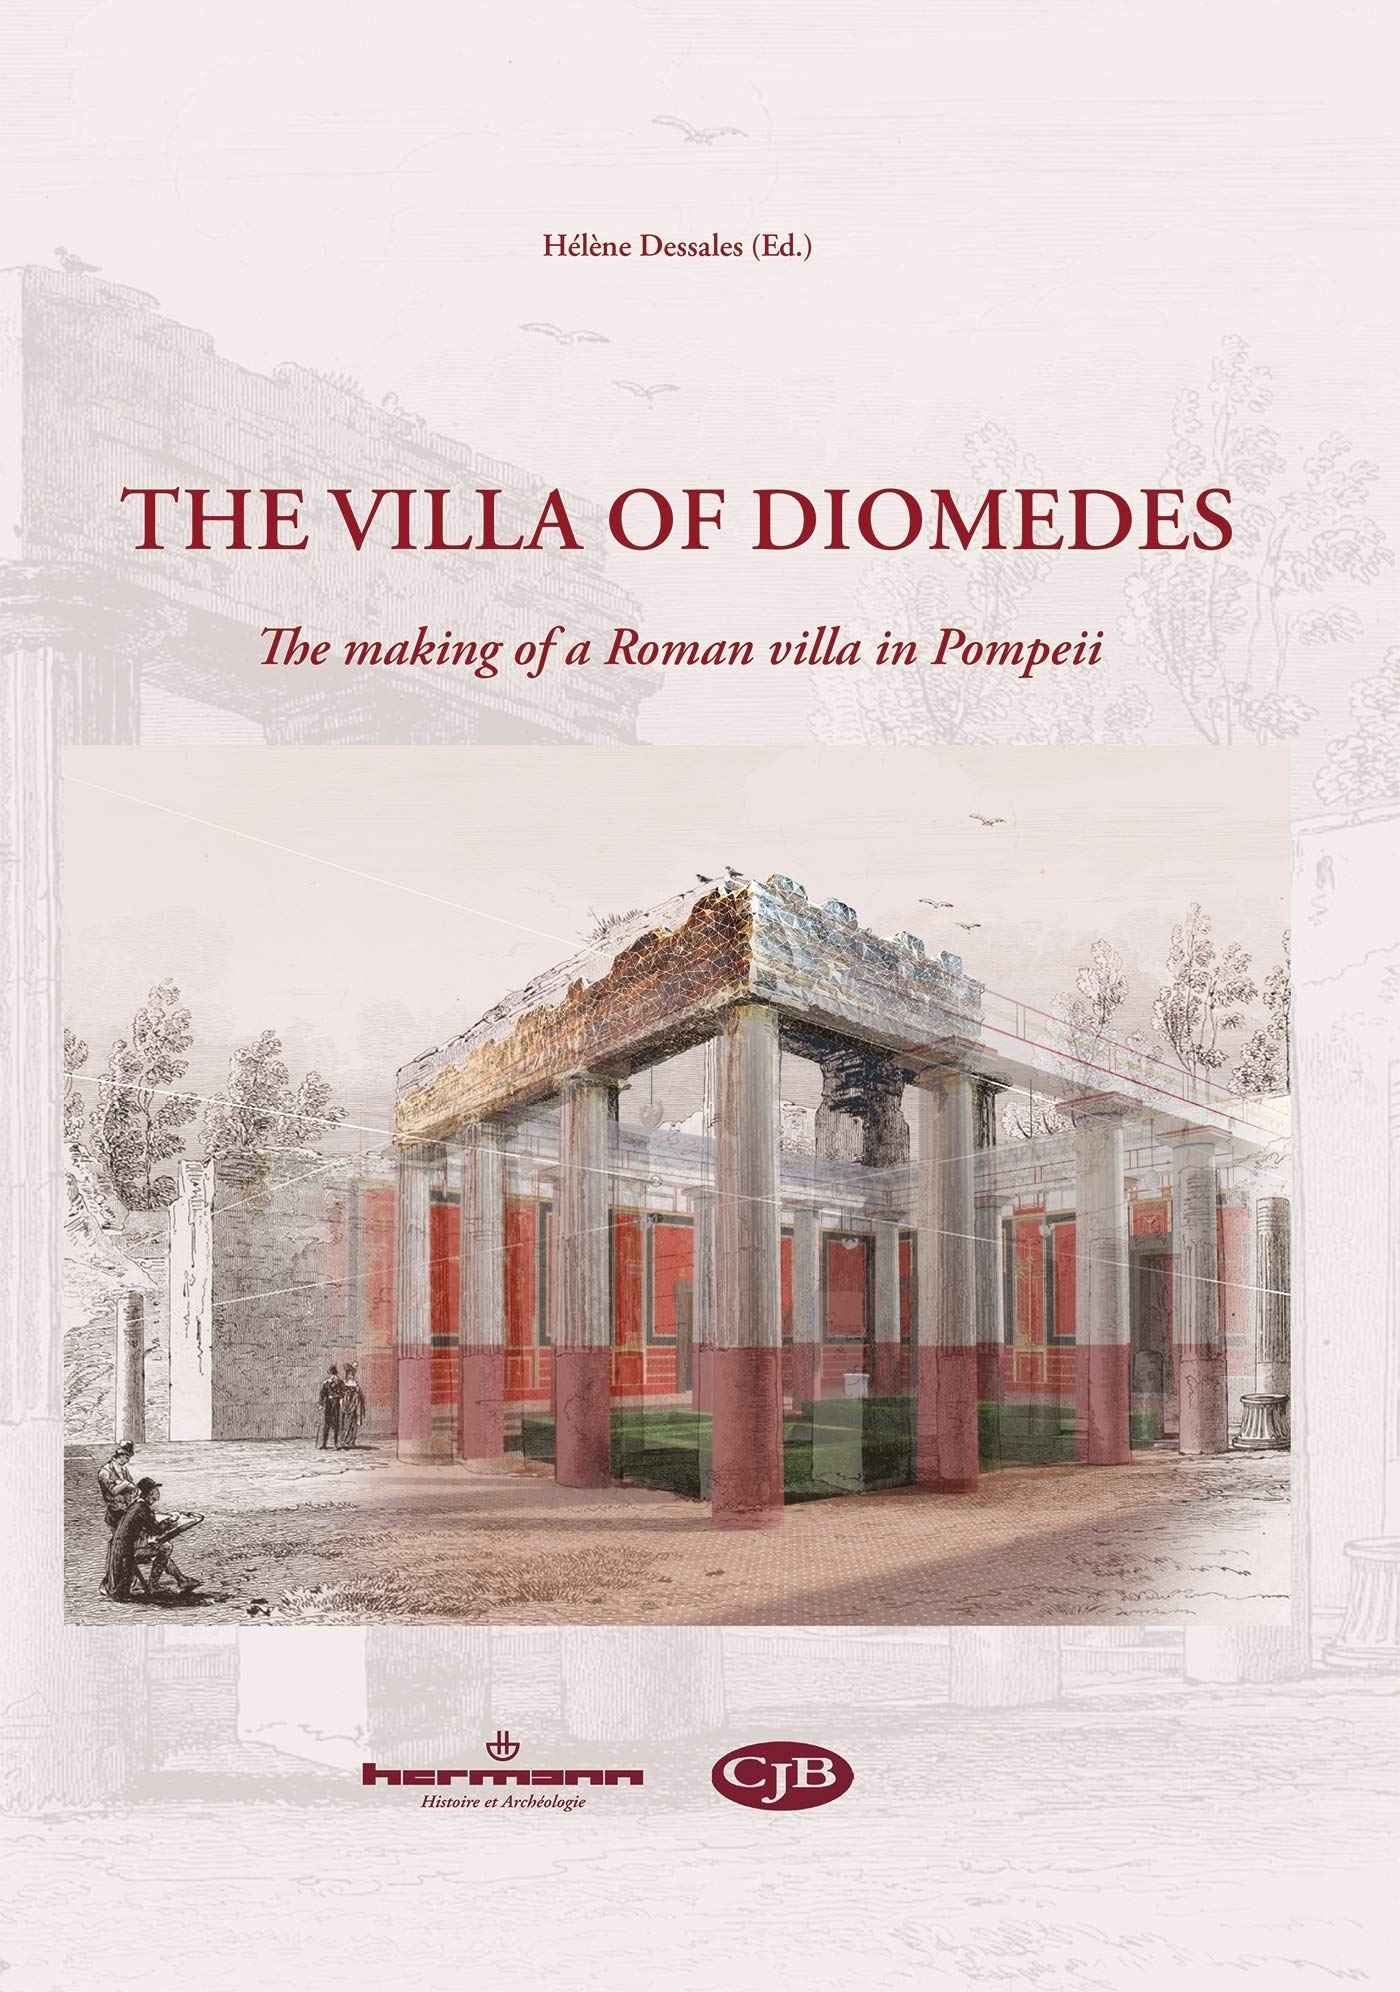 The Villa of Diomedes. The making of a Roman villa in Pompeii, 2020, 640 p.